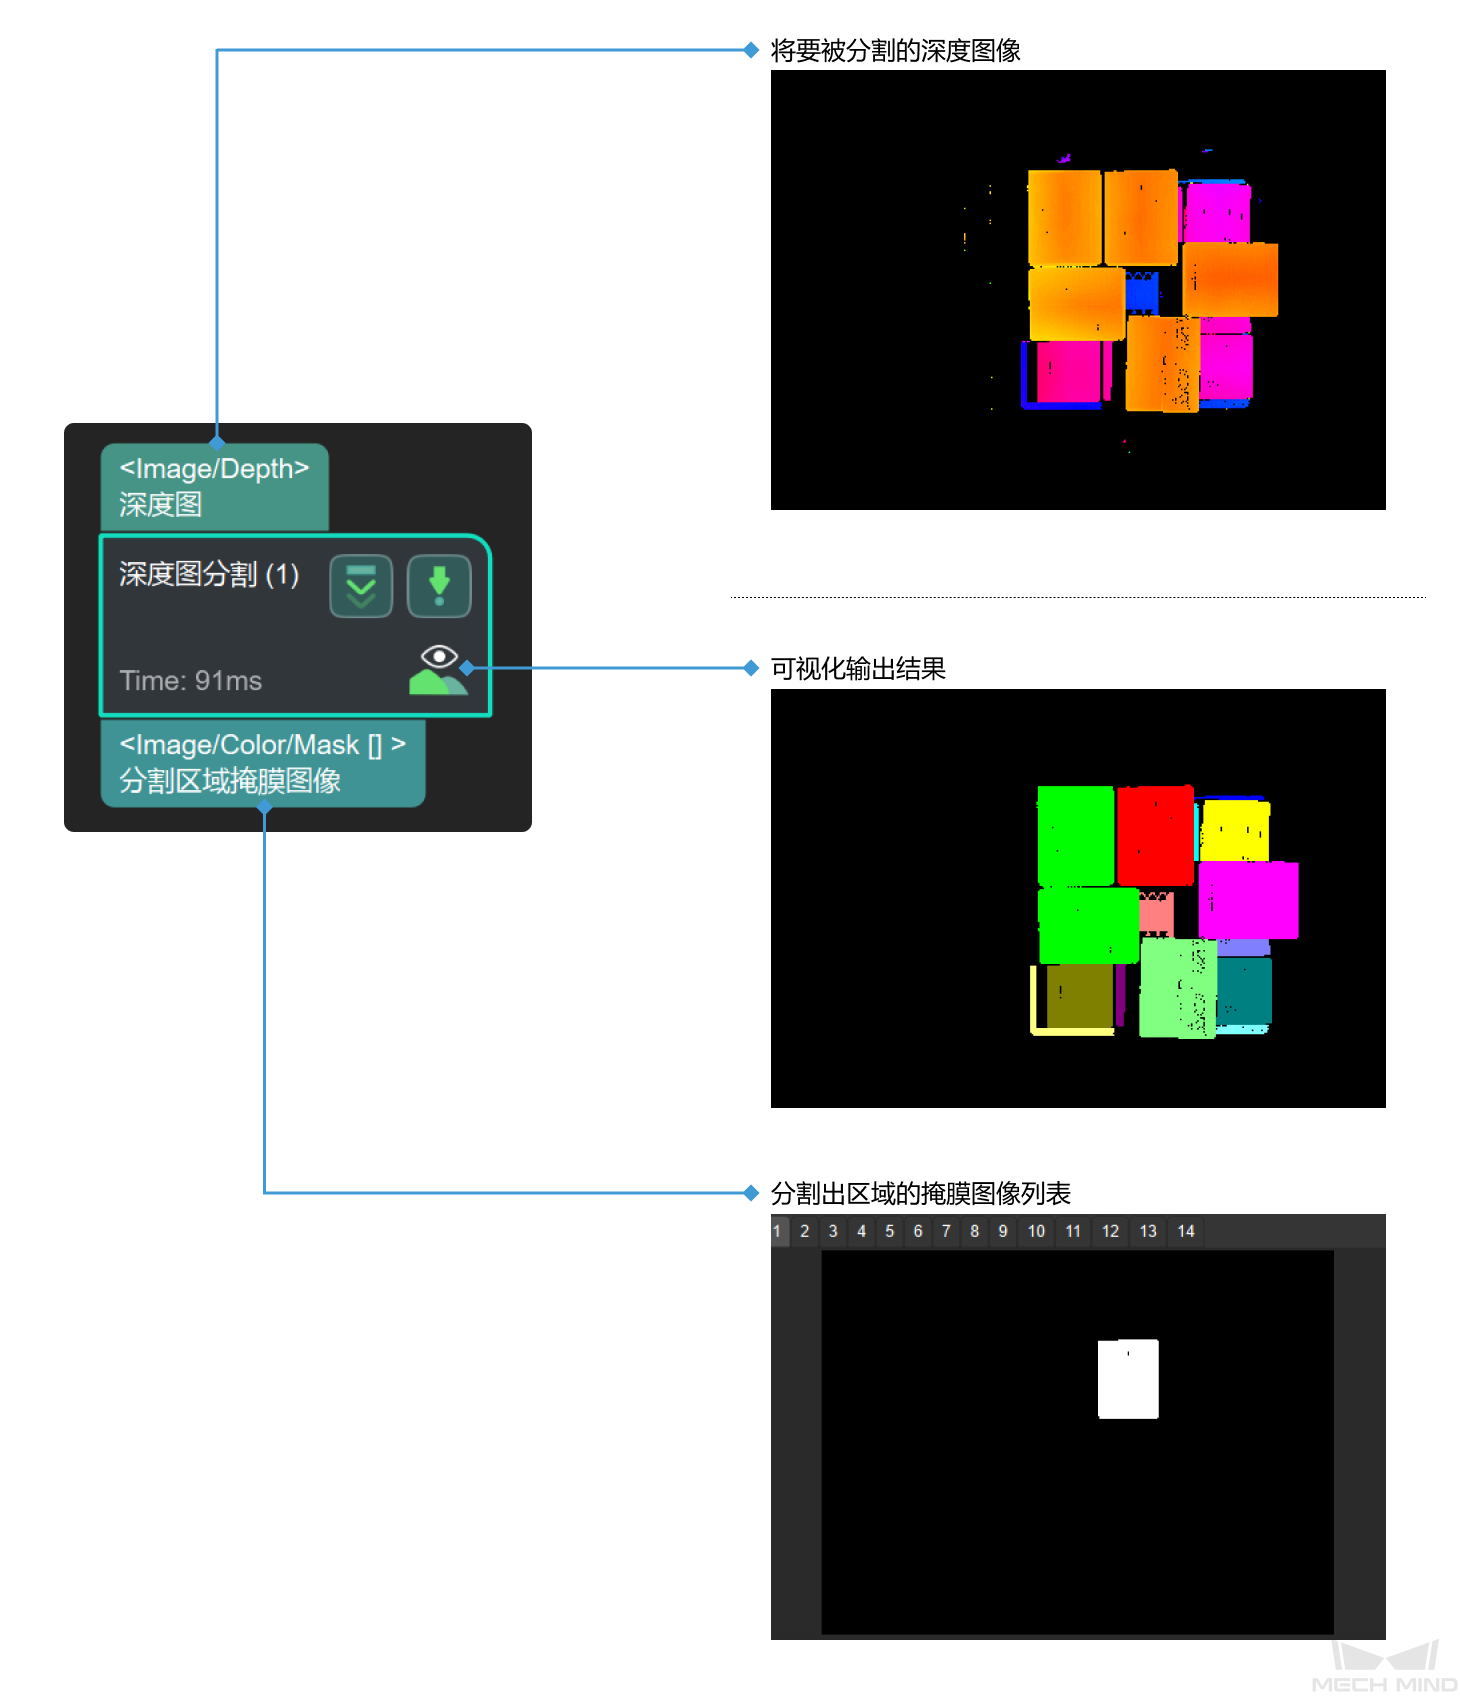 segment depth image input and output